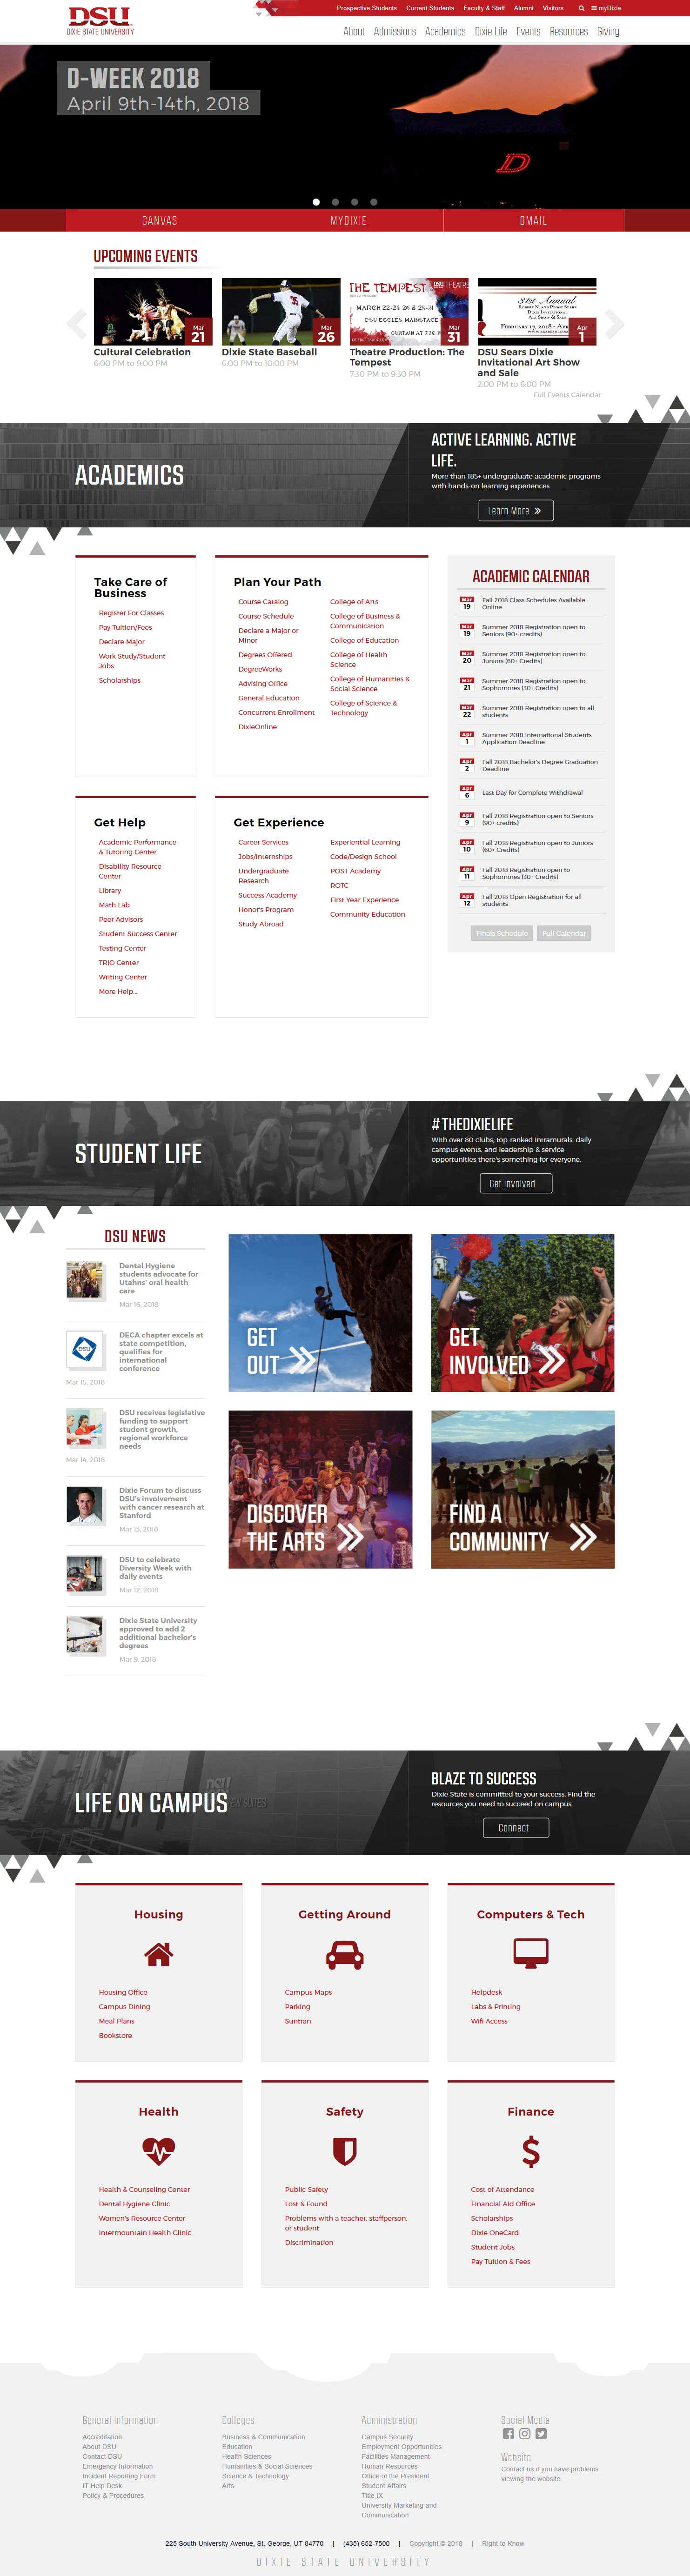 Student Portal, Desktop View